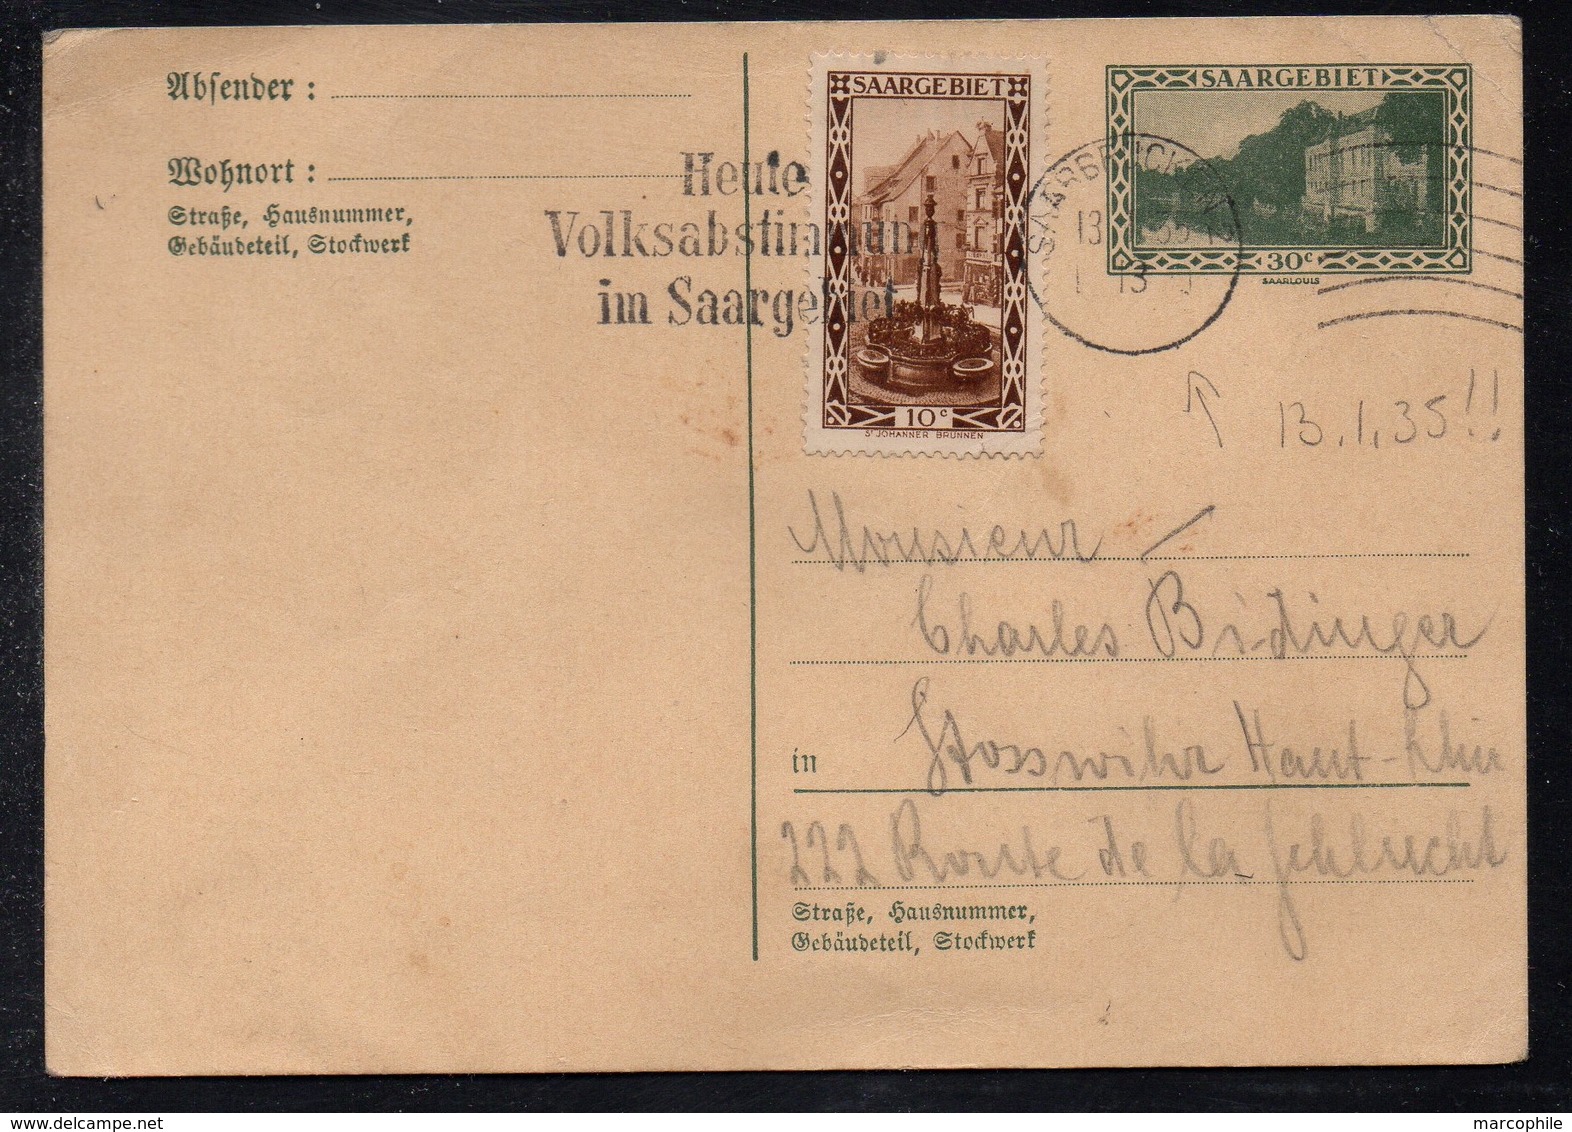 SARRE - SAARGEBIET / 13-1-1935 SAARBRÜCKEN - PLEBISCITE - ENTIER POSTAL POUR LA FRANCE / COTE 78 EUROS (ref 7640) - Ganzsachen